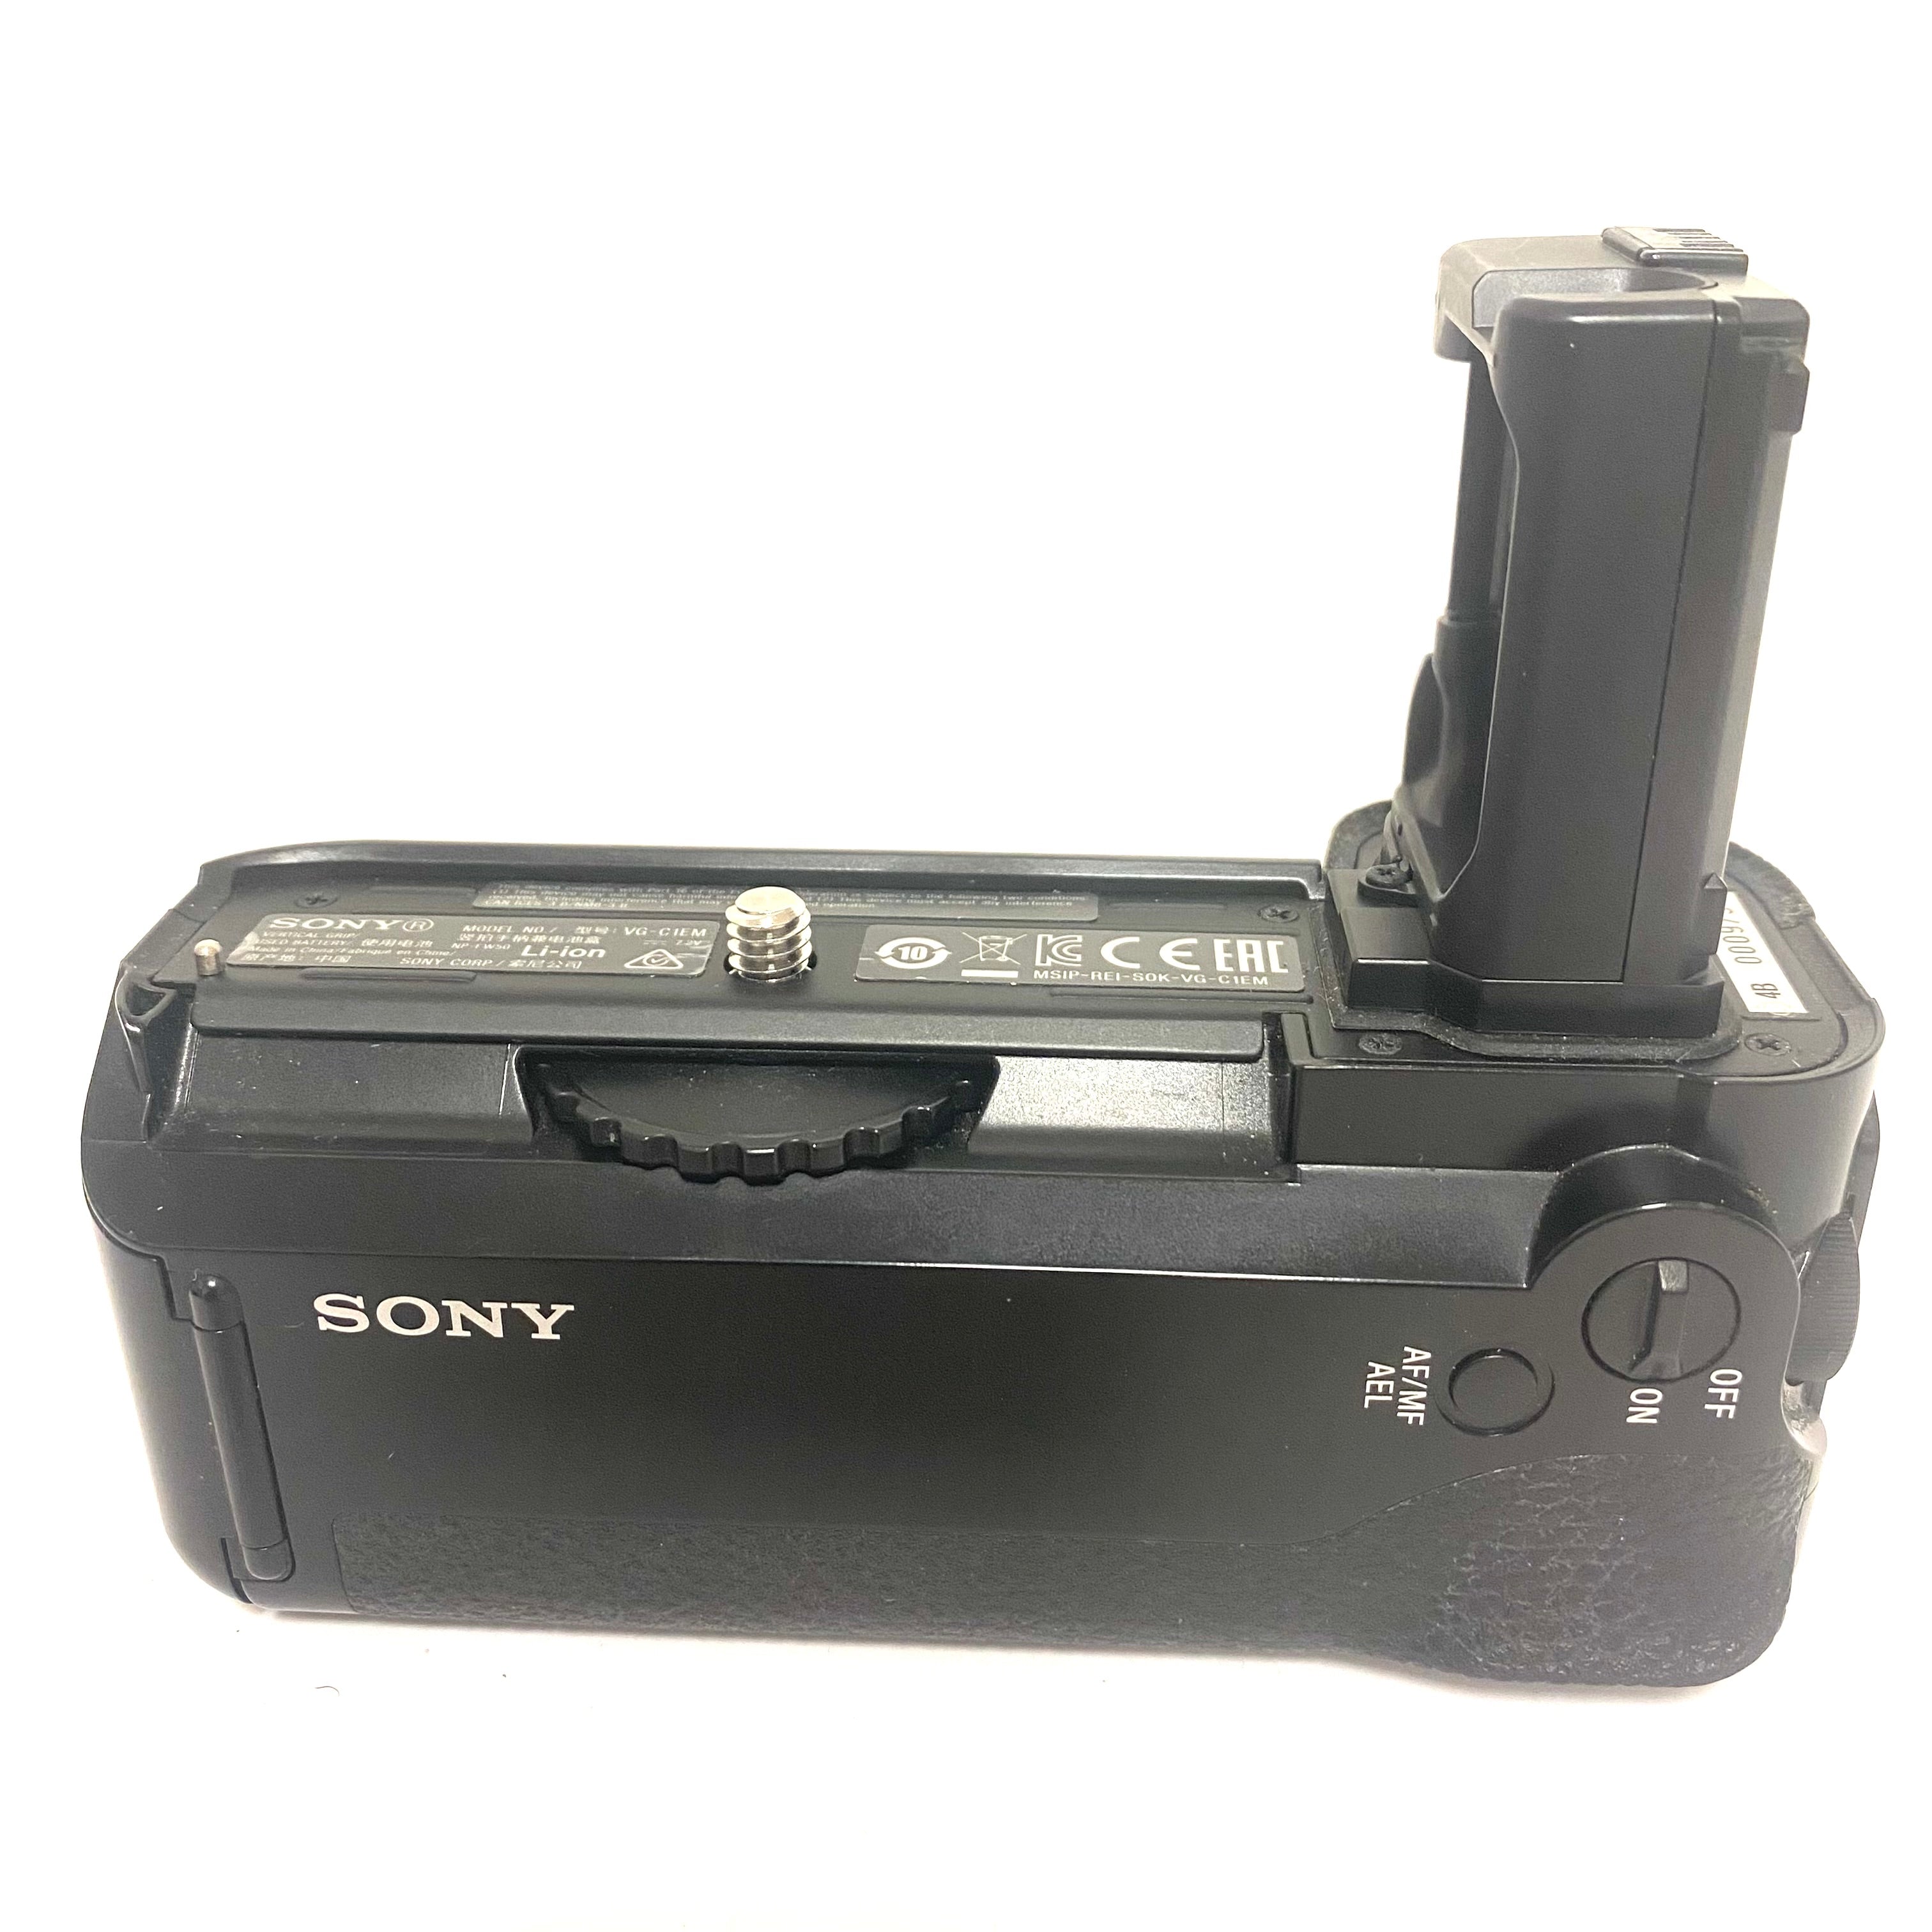 Sony battery grip VG-C1EM usato